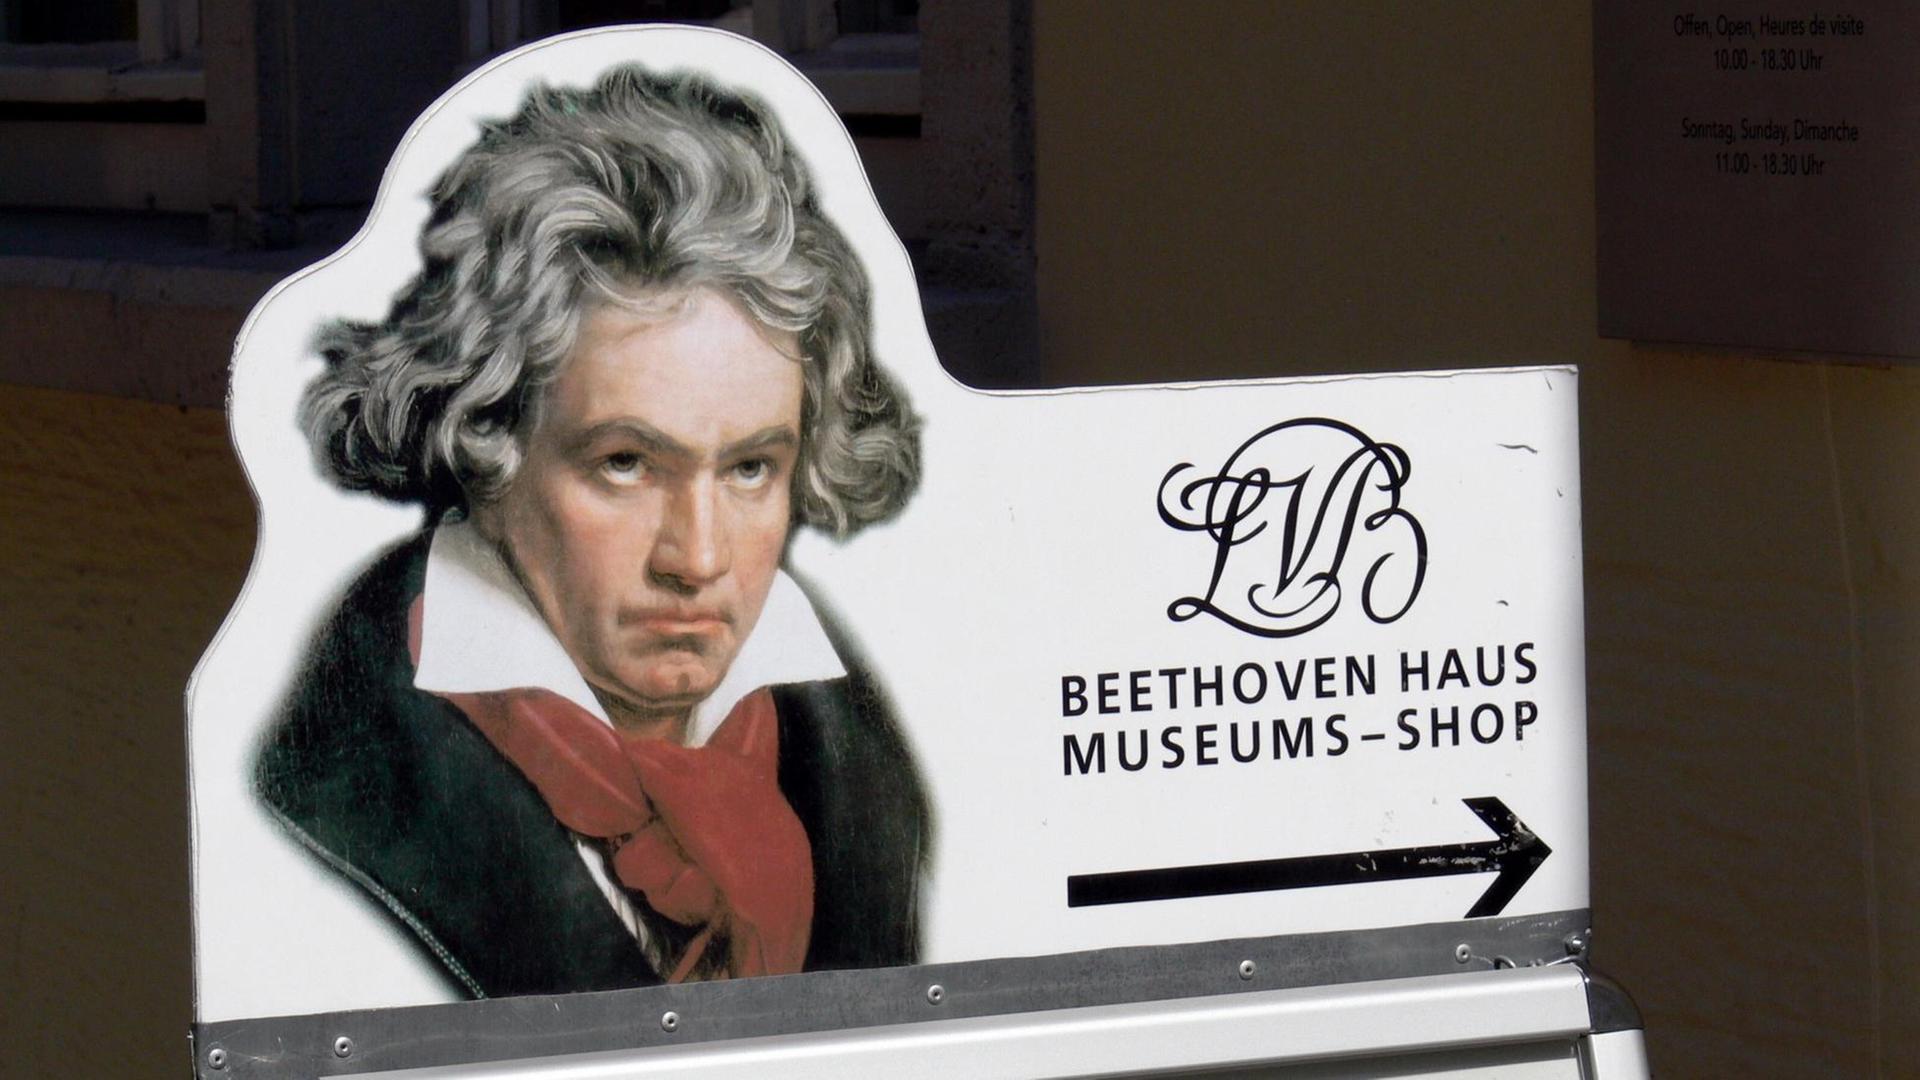 Werbung für den Museums-Shop vor dem Geburtshaus Ludwig van Beethoven in Bonn.